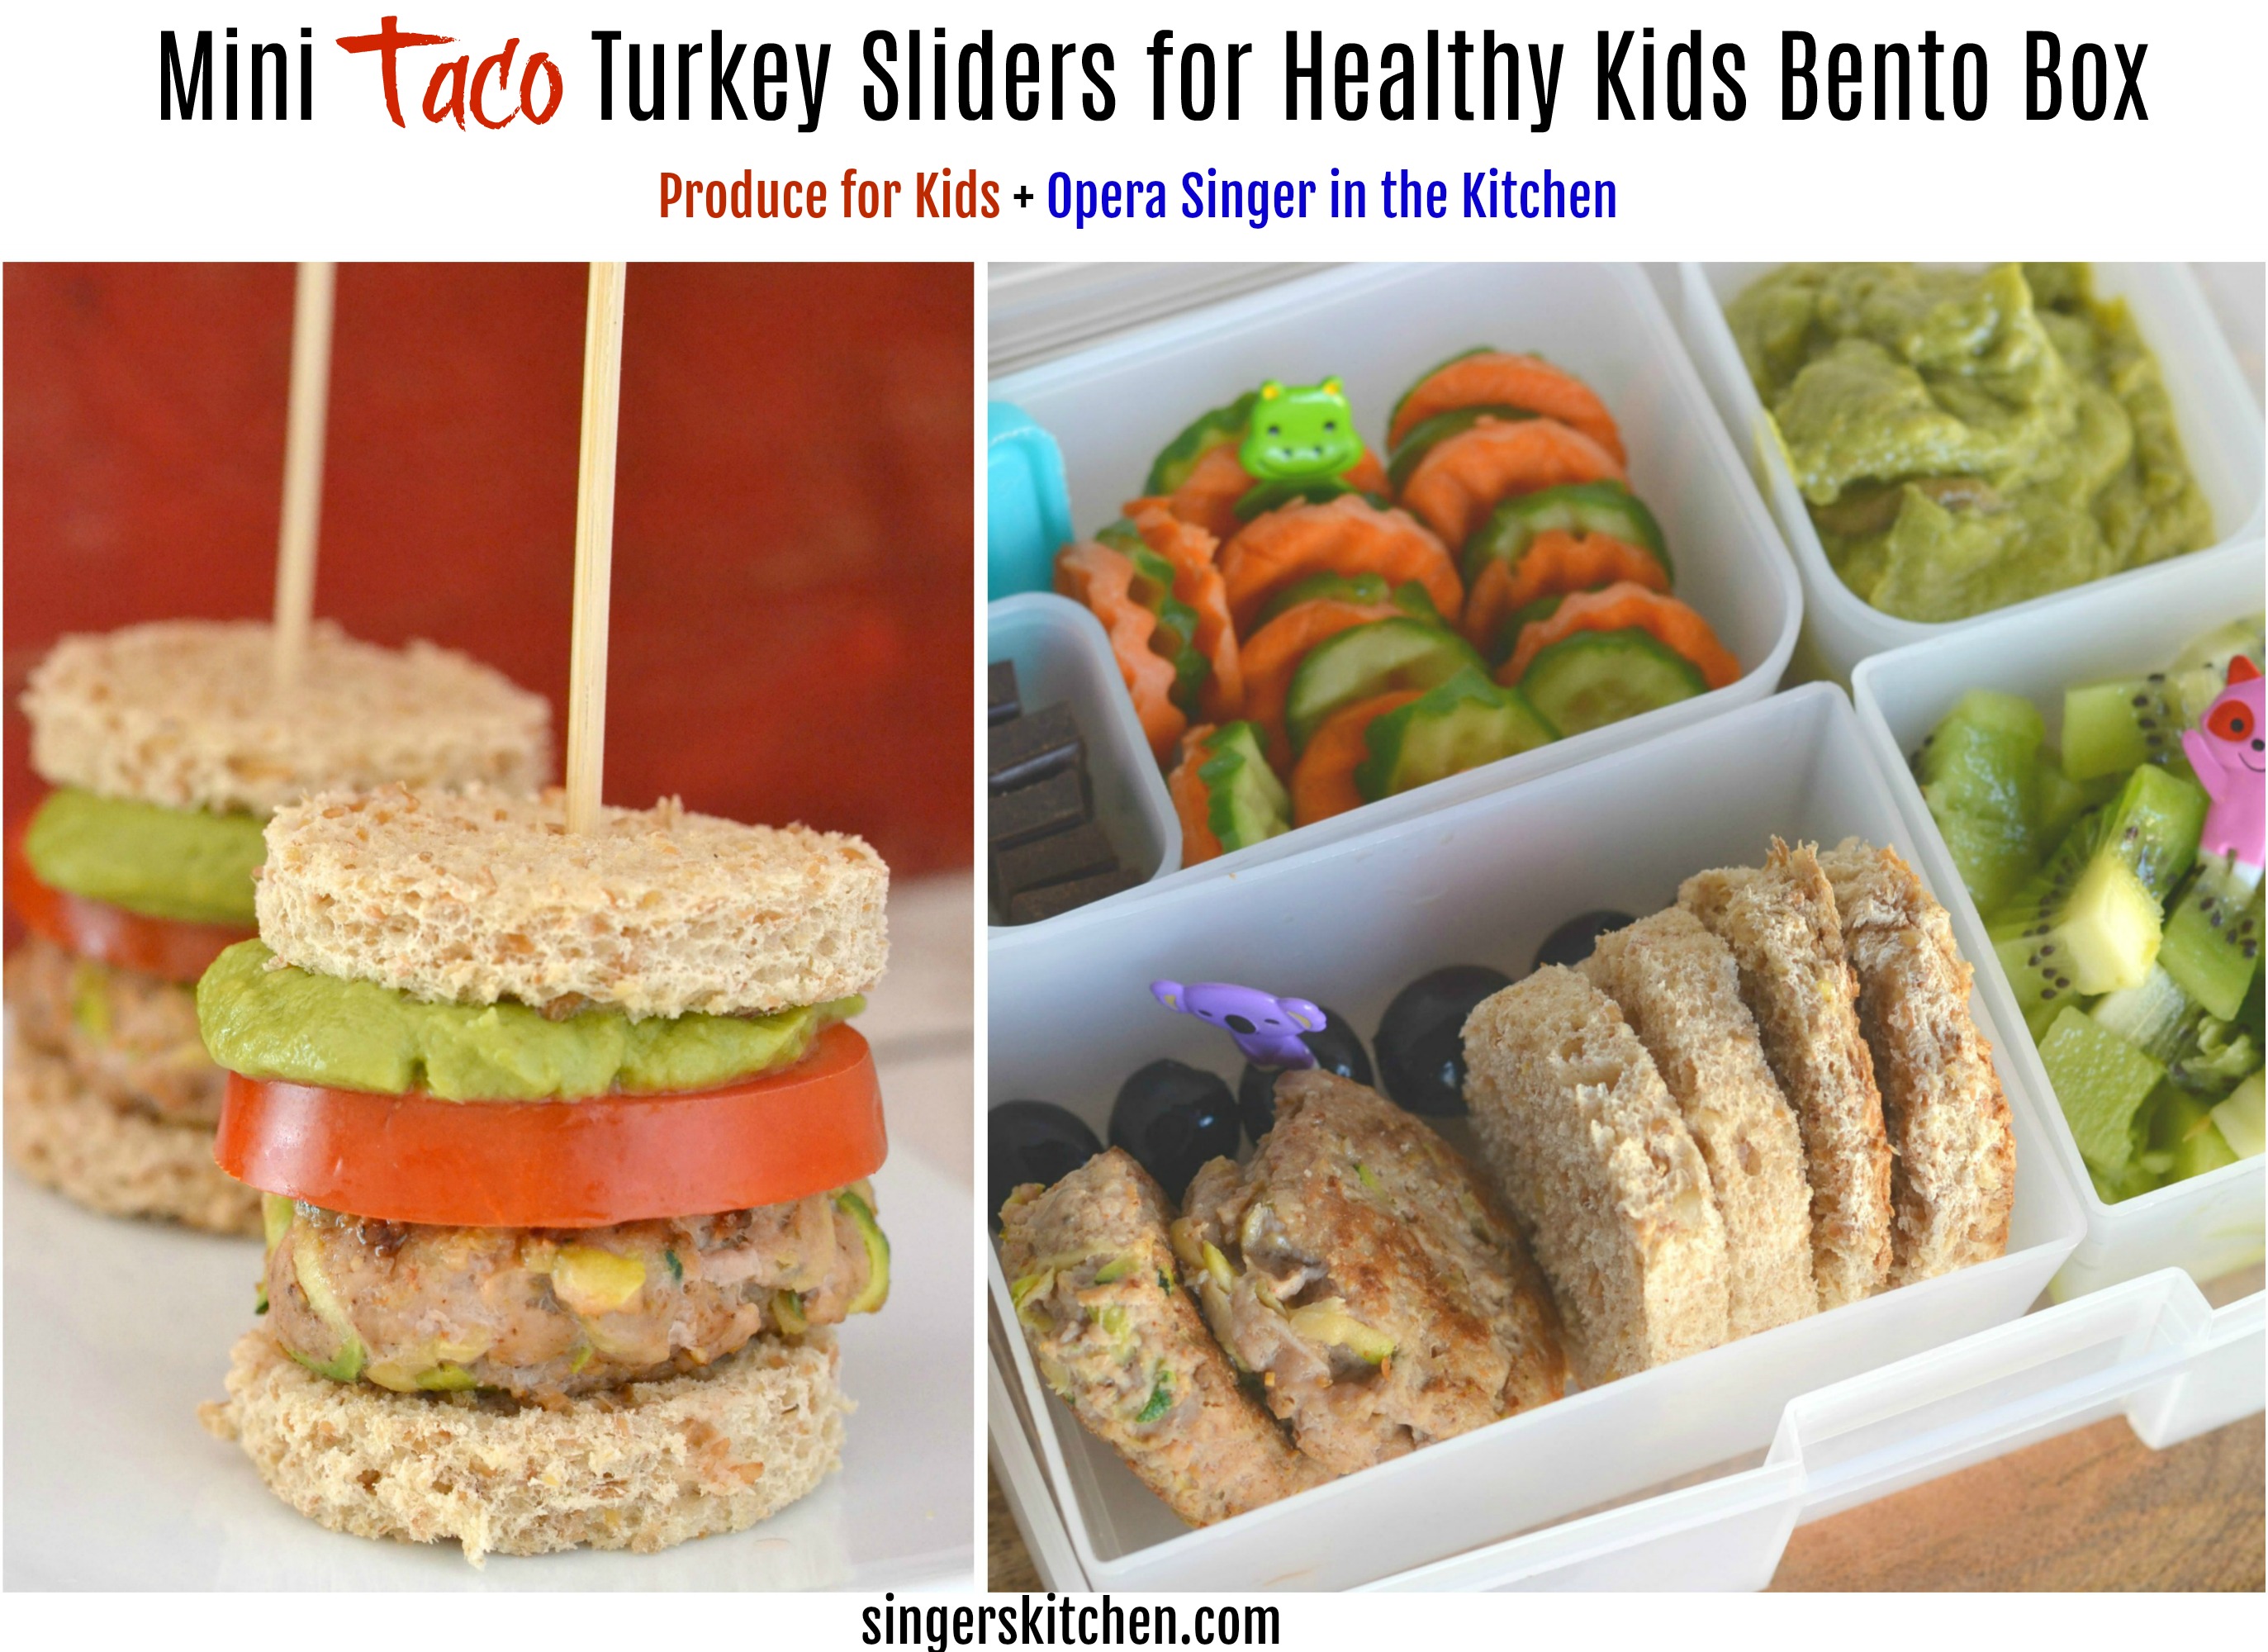 http://singerskitchen.com/wp-content/uploads/2017/08/Mini-Taco-Turkey-Sliders-Title-Produce-for-Kids.jpg